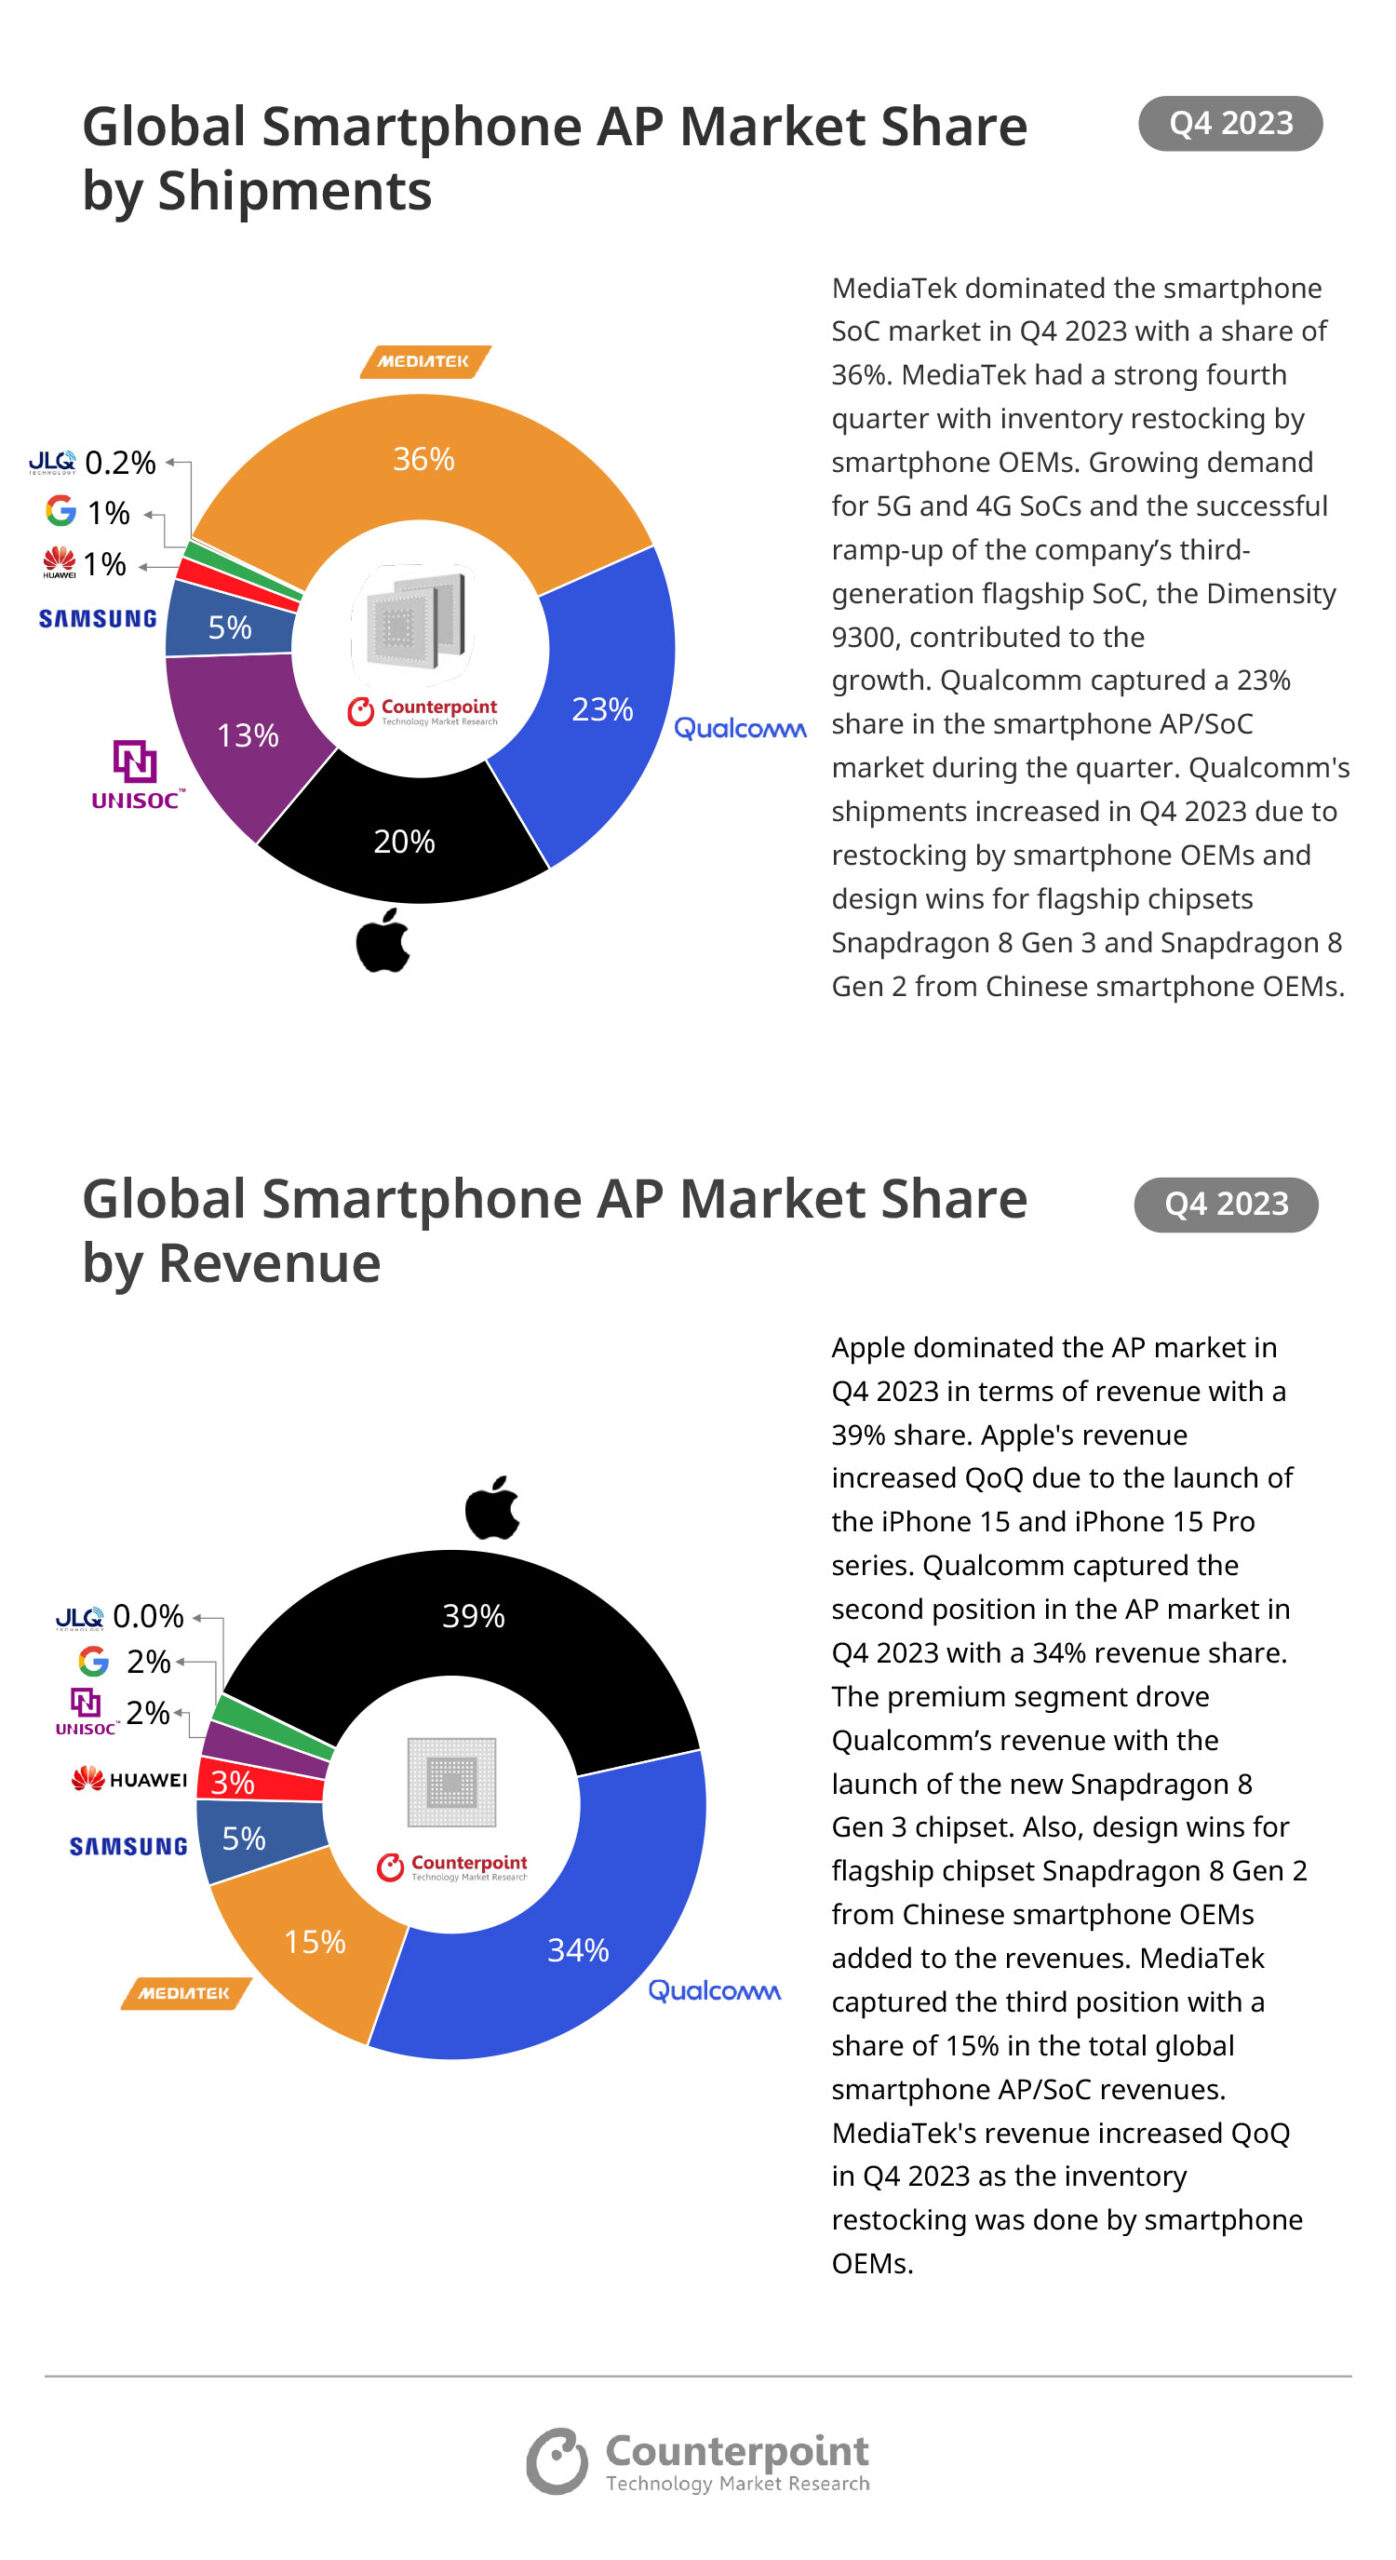 Global Smartphone AP Market Share by Shipments & Revenue, Q4 2023